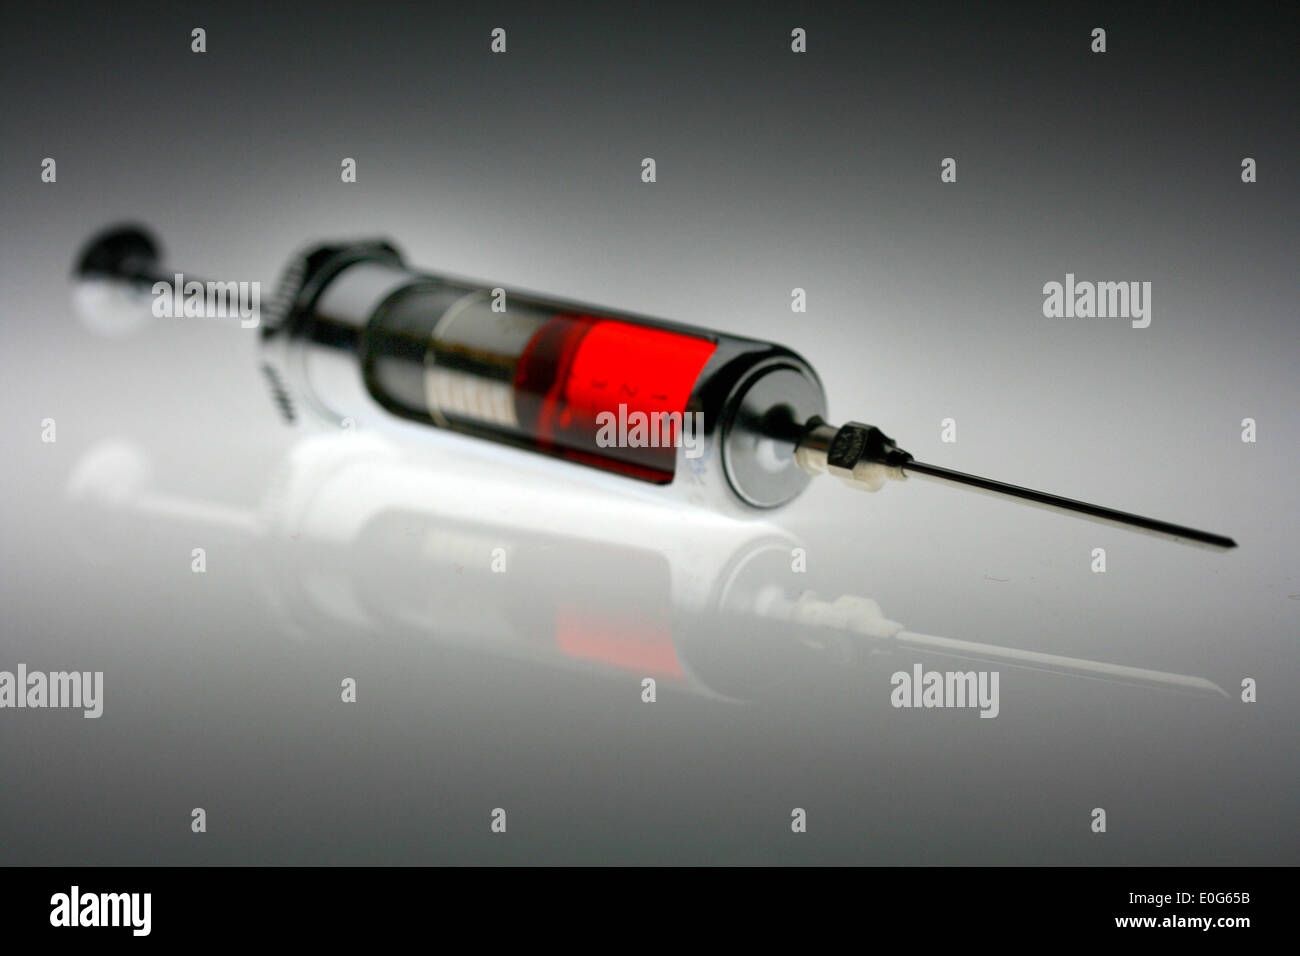 Syringe with red liquid Stock Photo